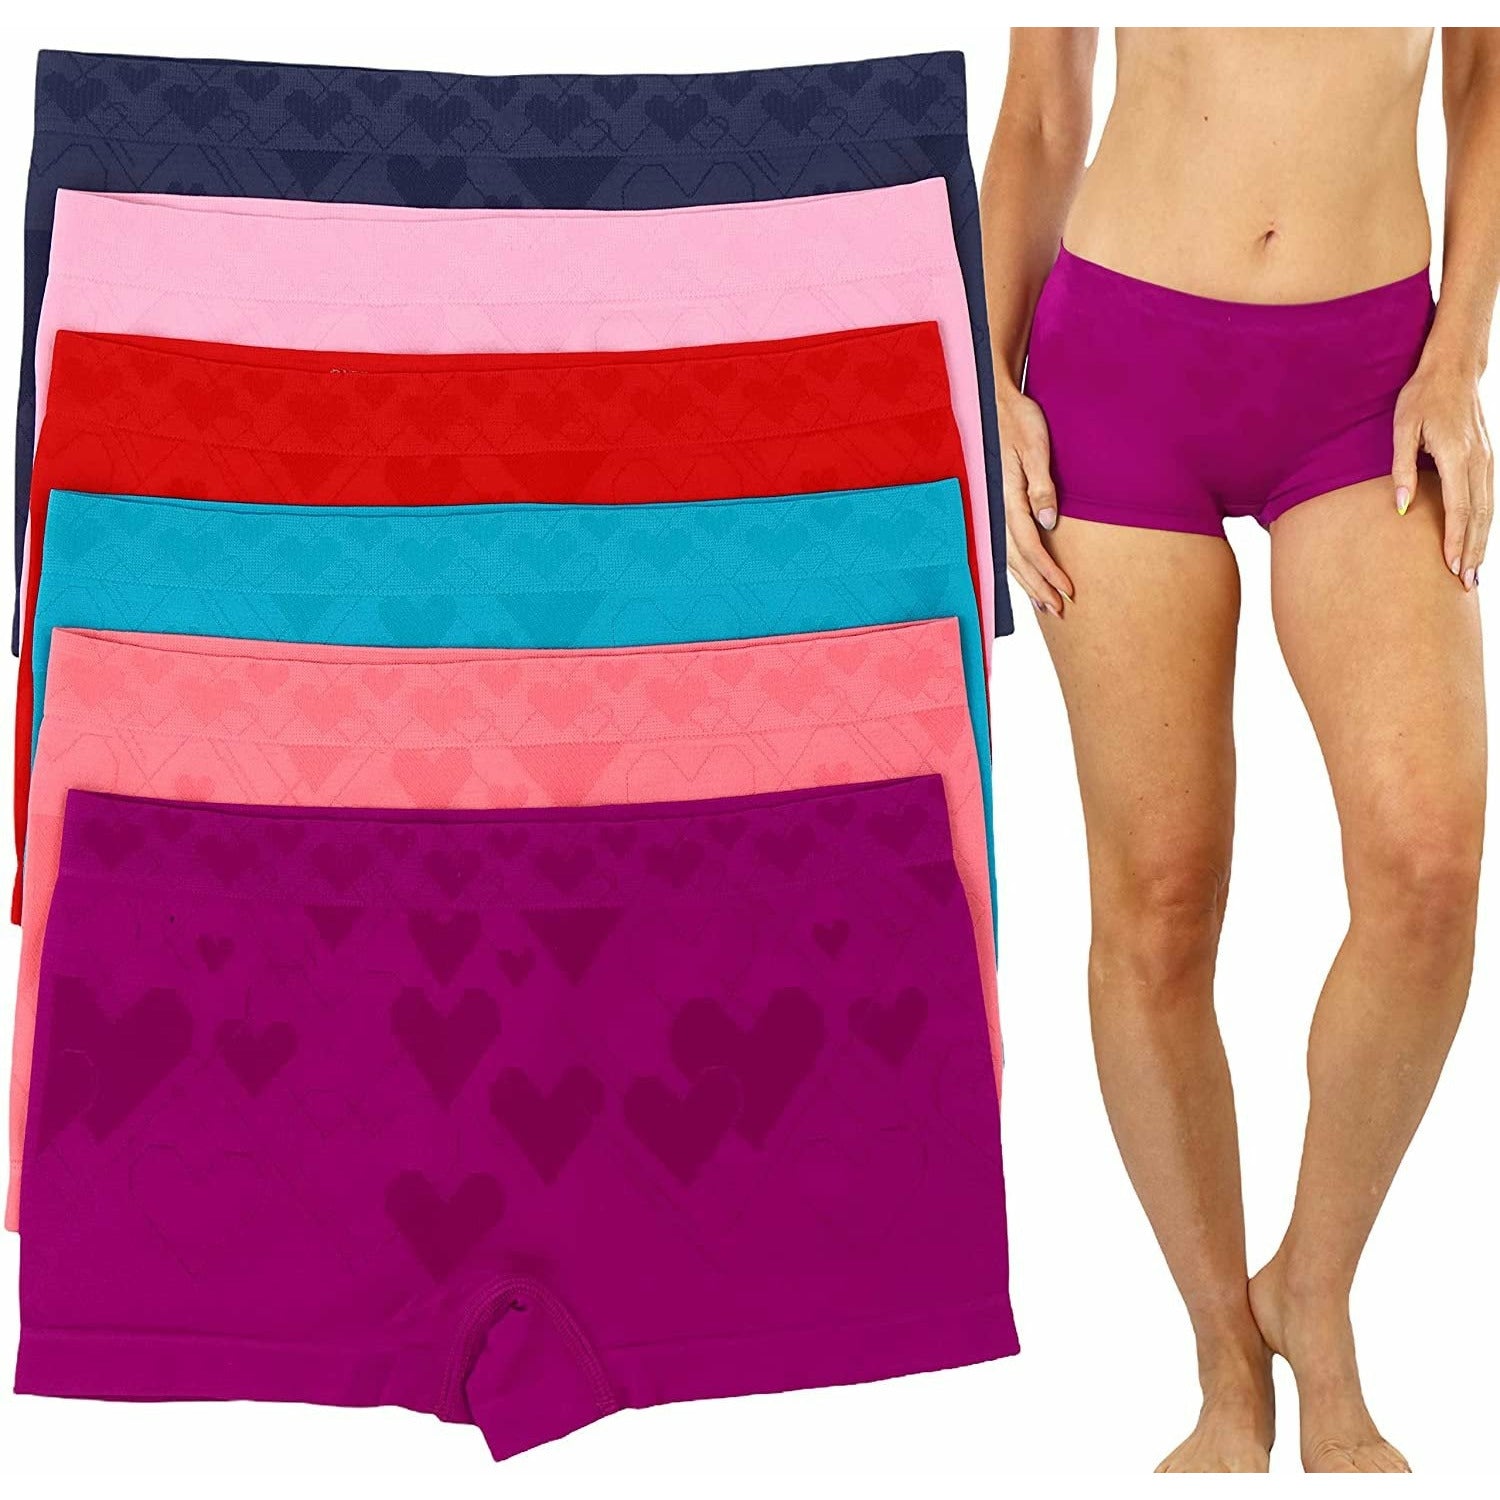 Ruxia Women's Boyshort Panties Nylon Seamless Underwear Comfy